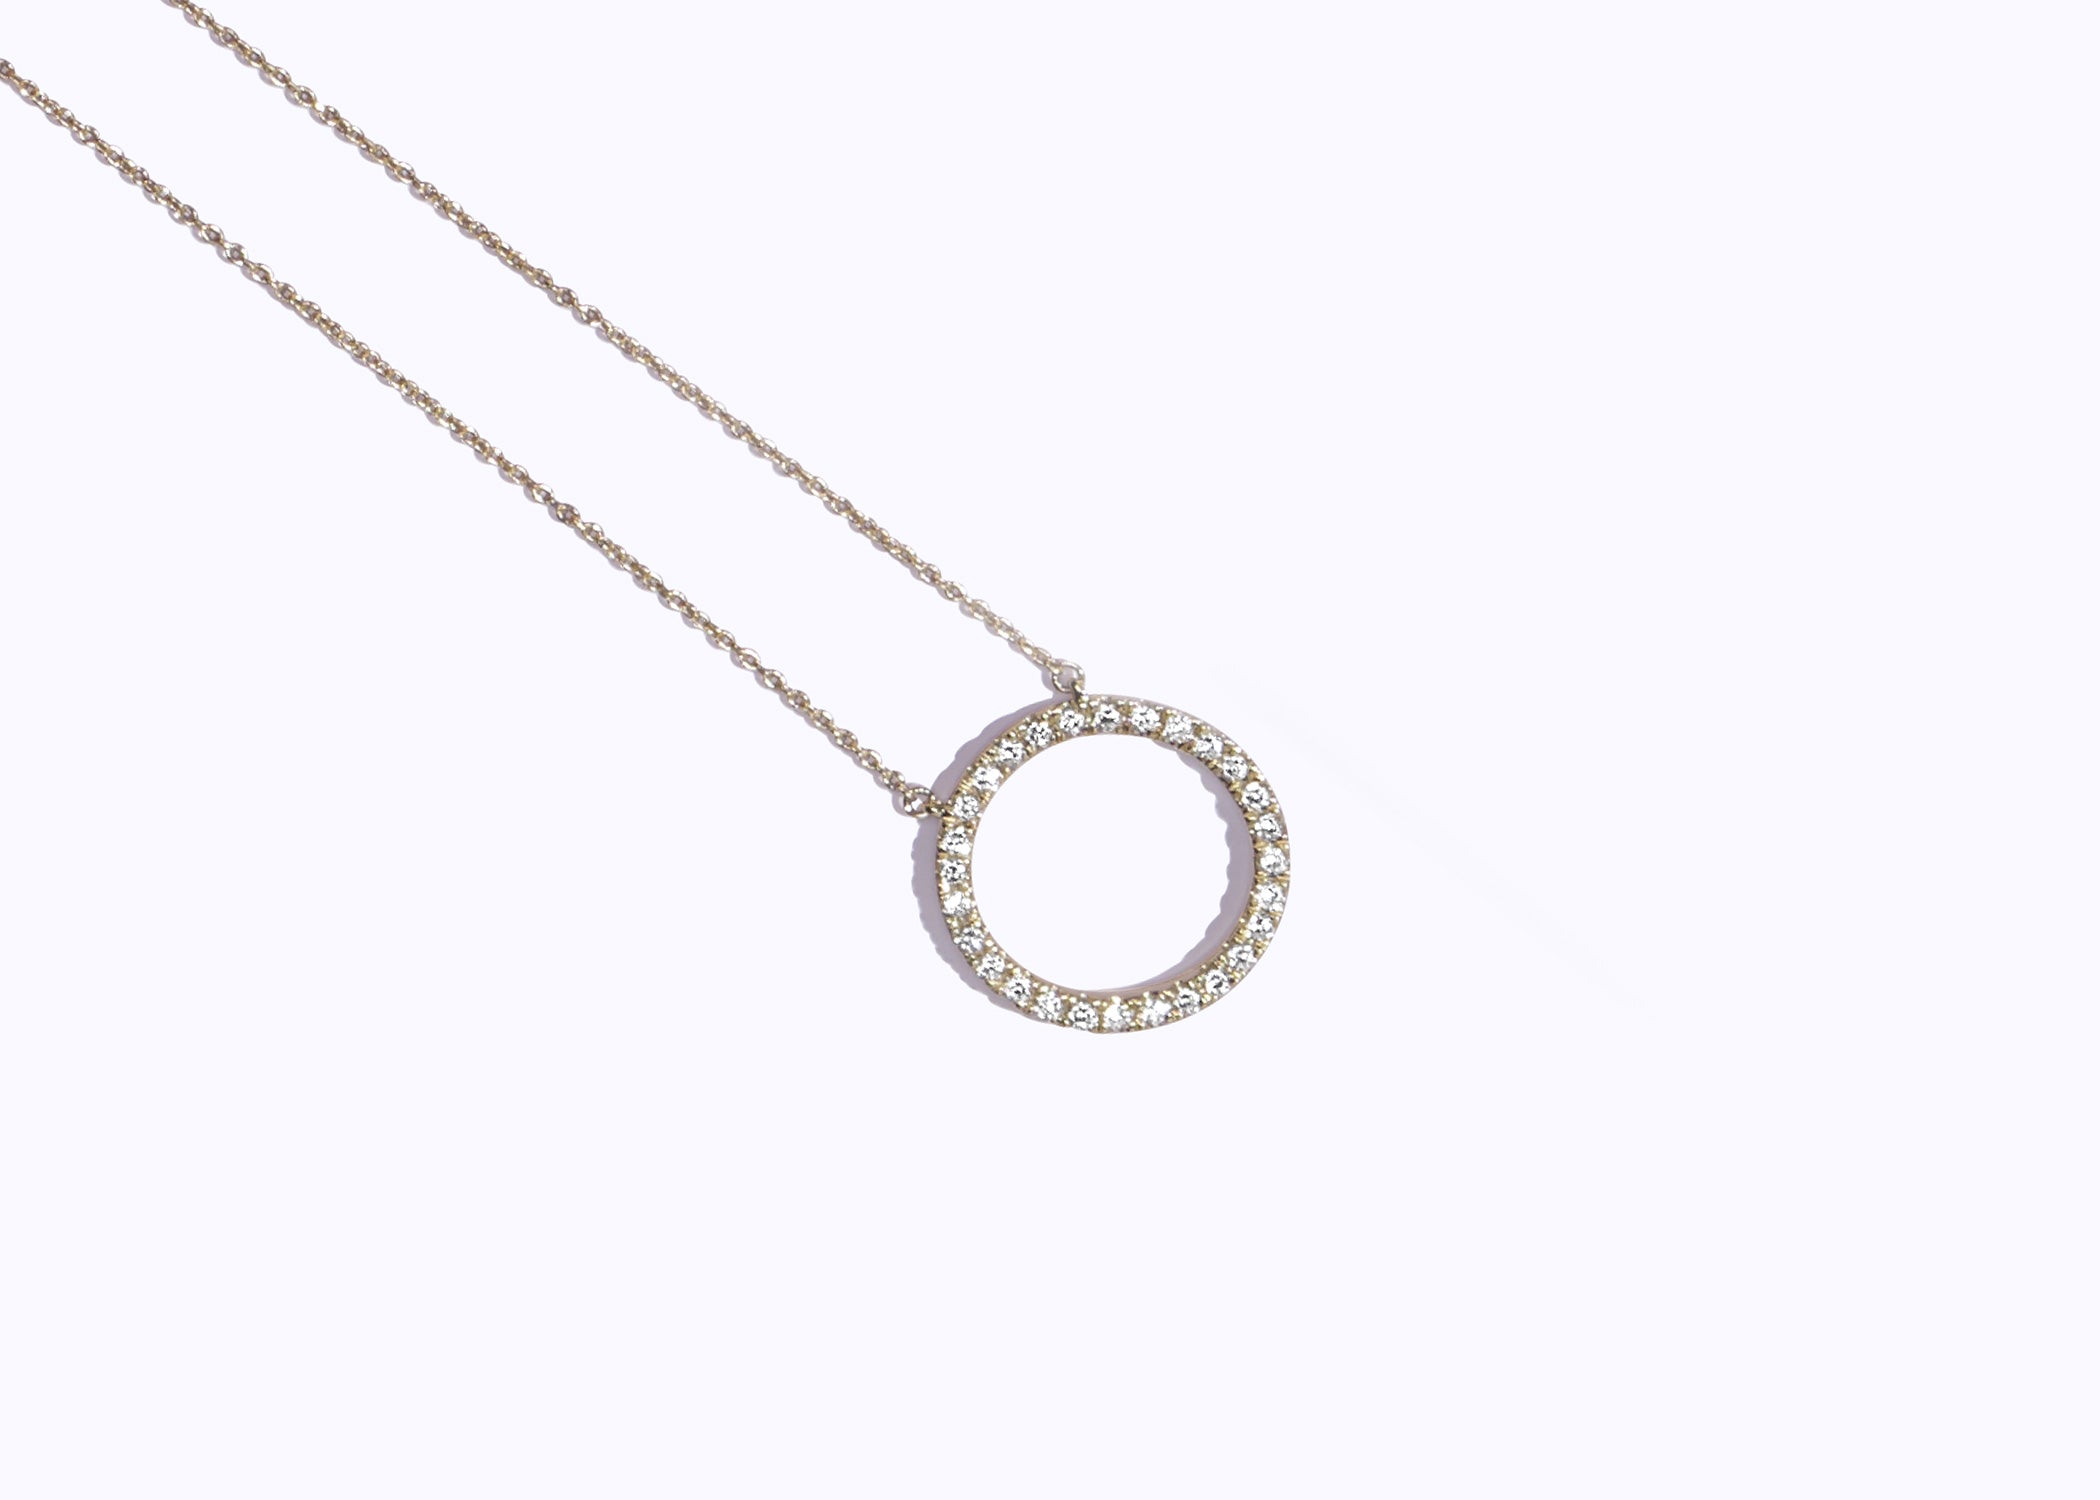 Circular Silhouette Necklace - Necklace 